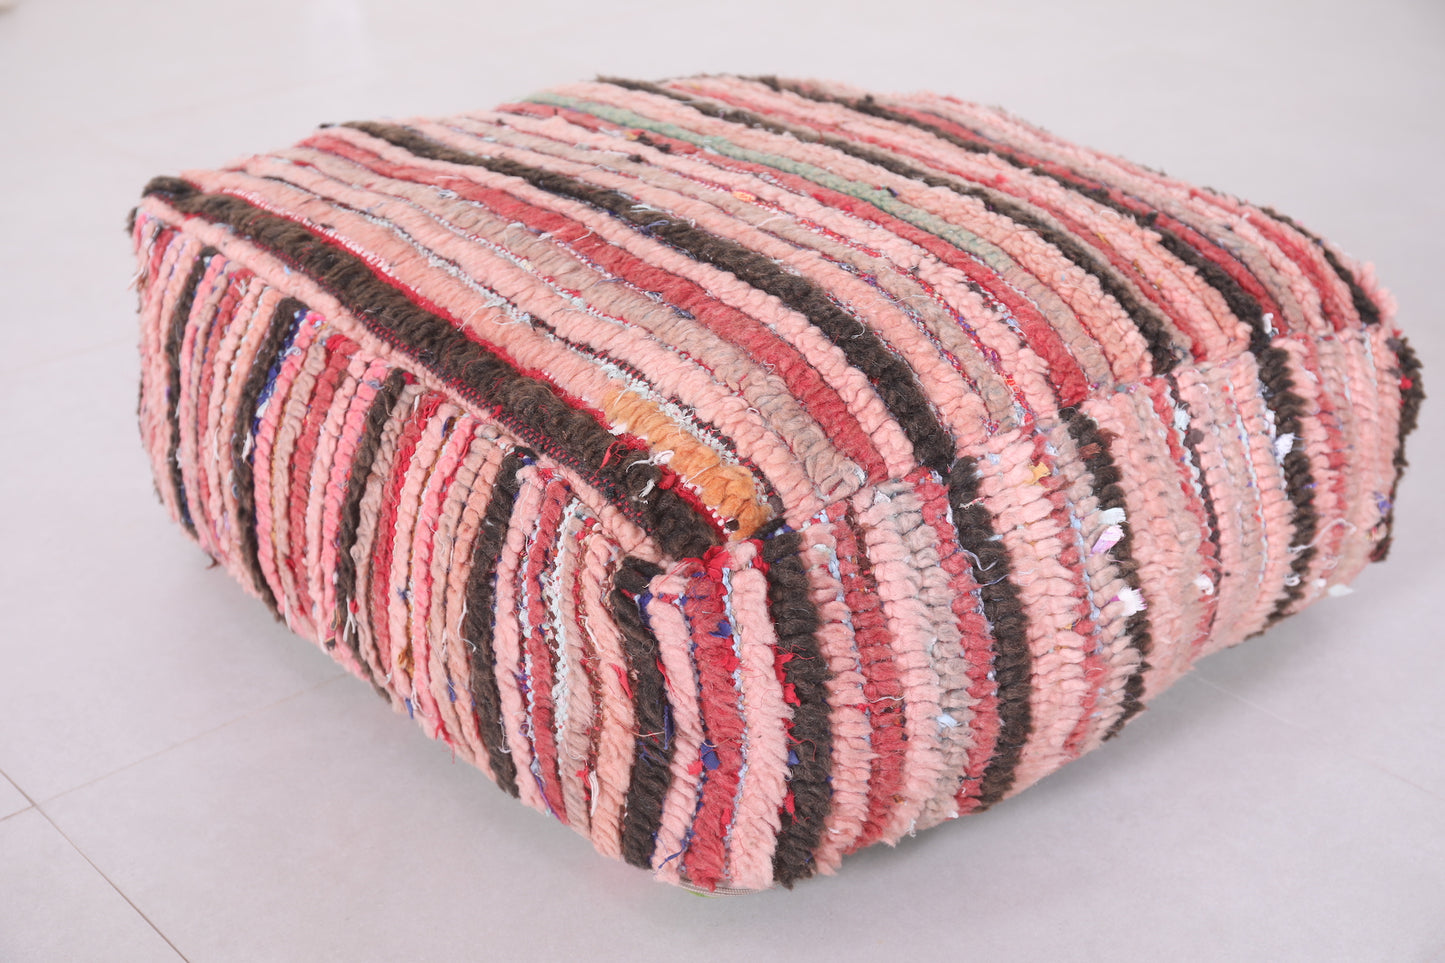 Hand Woven berber Moroccan Ottoman Pillow